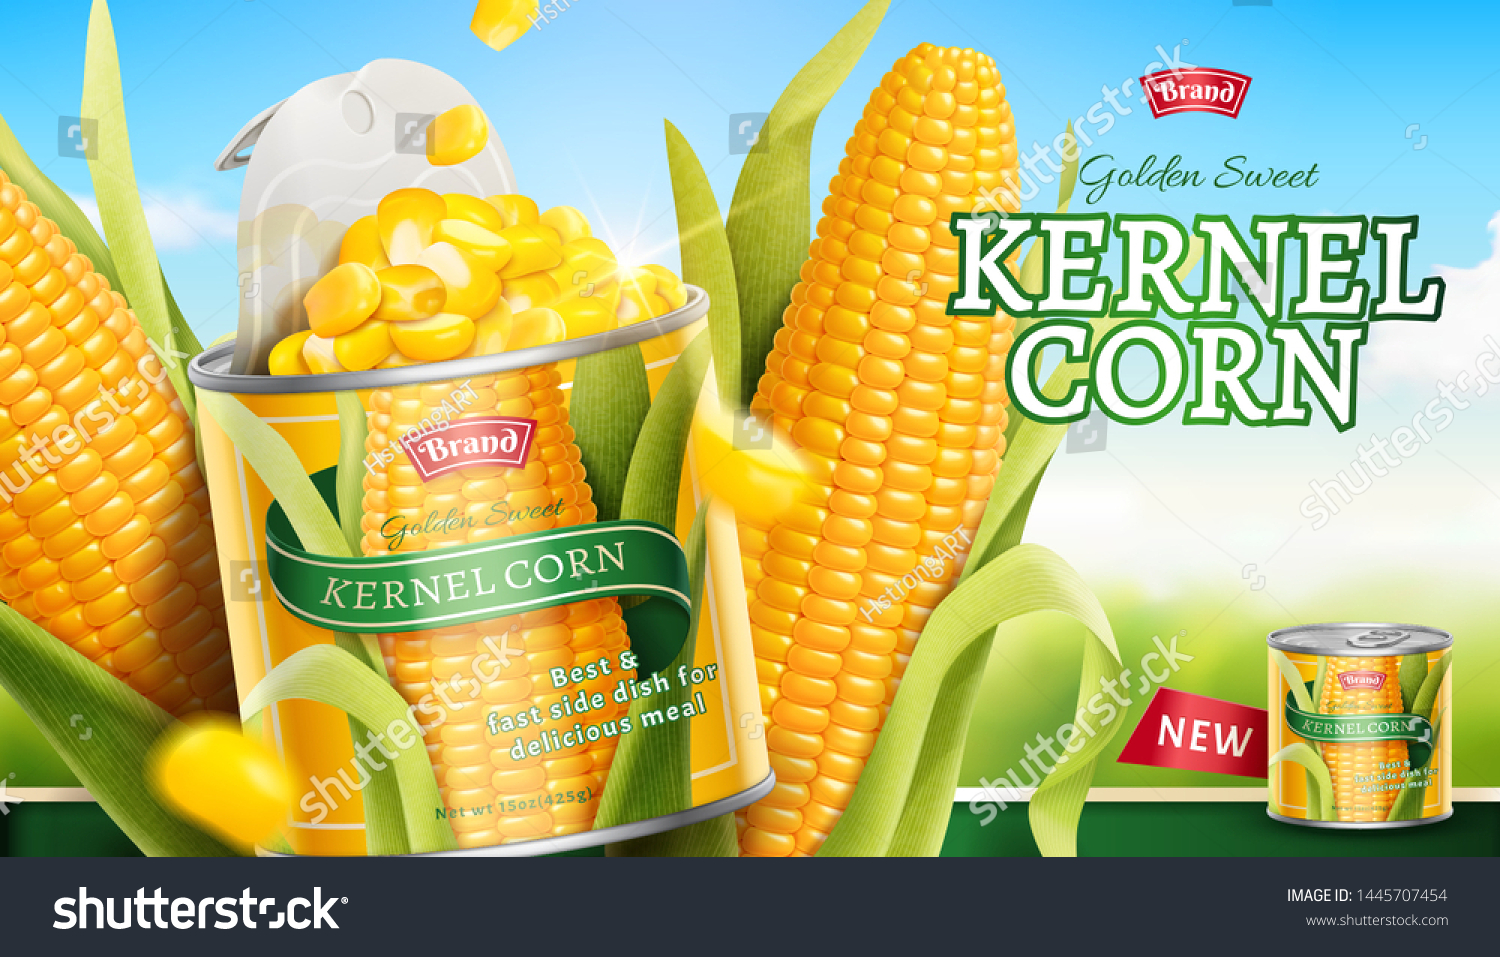 stock-vector-premium-kernel-corn-can-ads-in-d-illustration-on-bokeh-blue-sky-background-1445707454